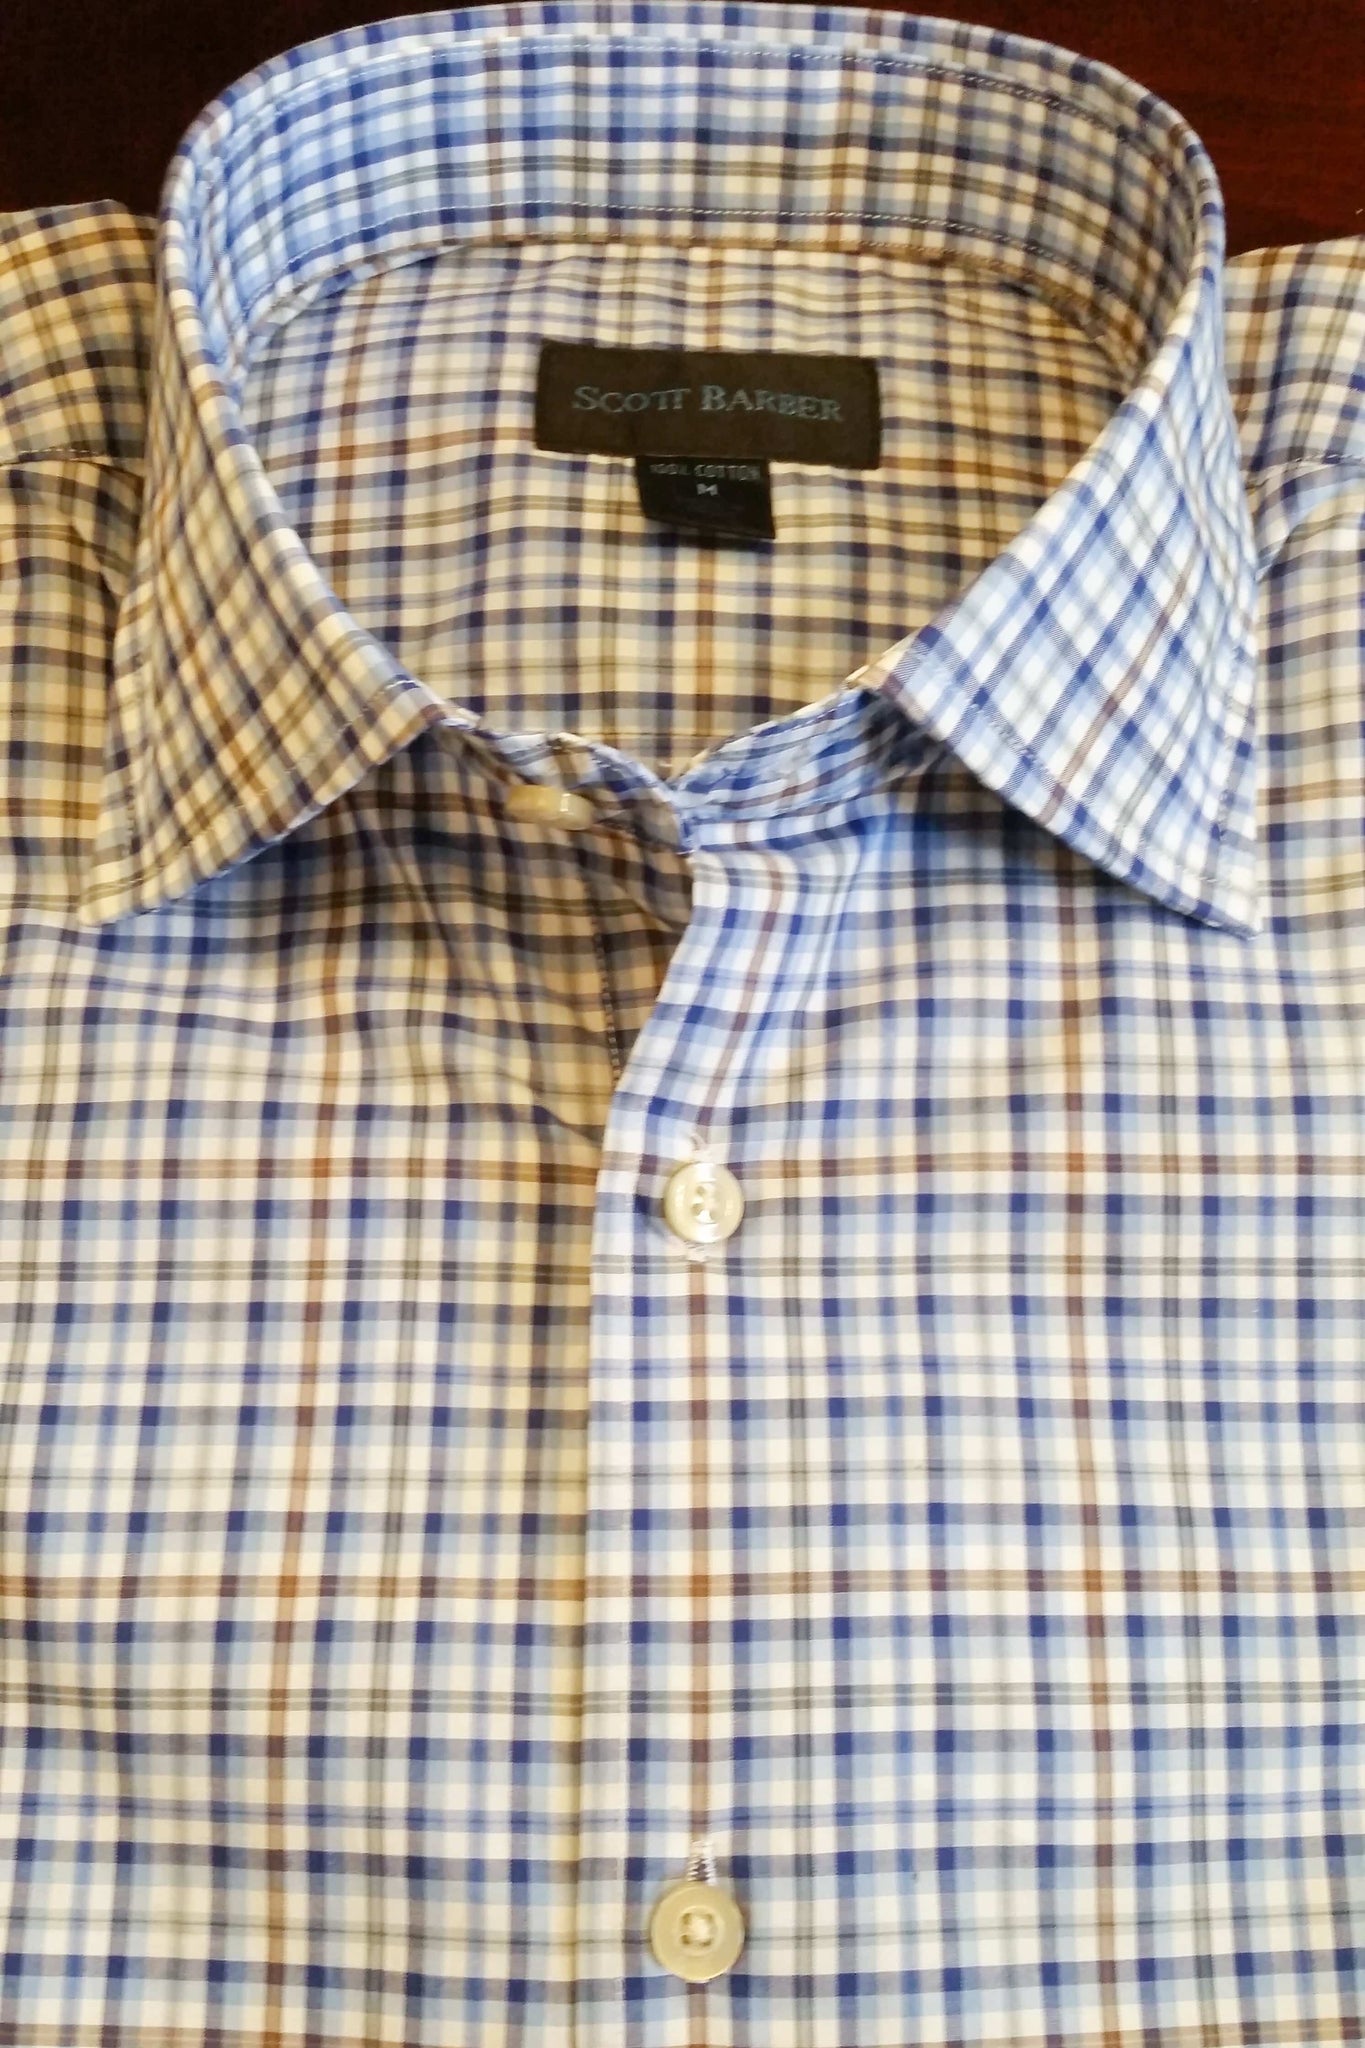 White with Blue & Khaki Plaid Spread Collar Shirt by Scott Barber - Rainwater's Men's Clothing and Tuxedo Rental